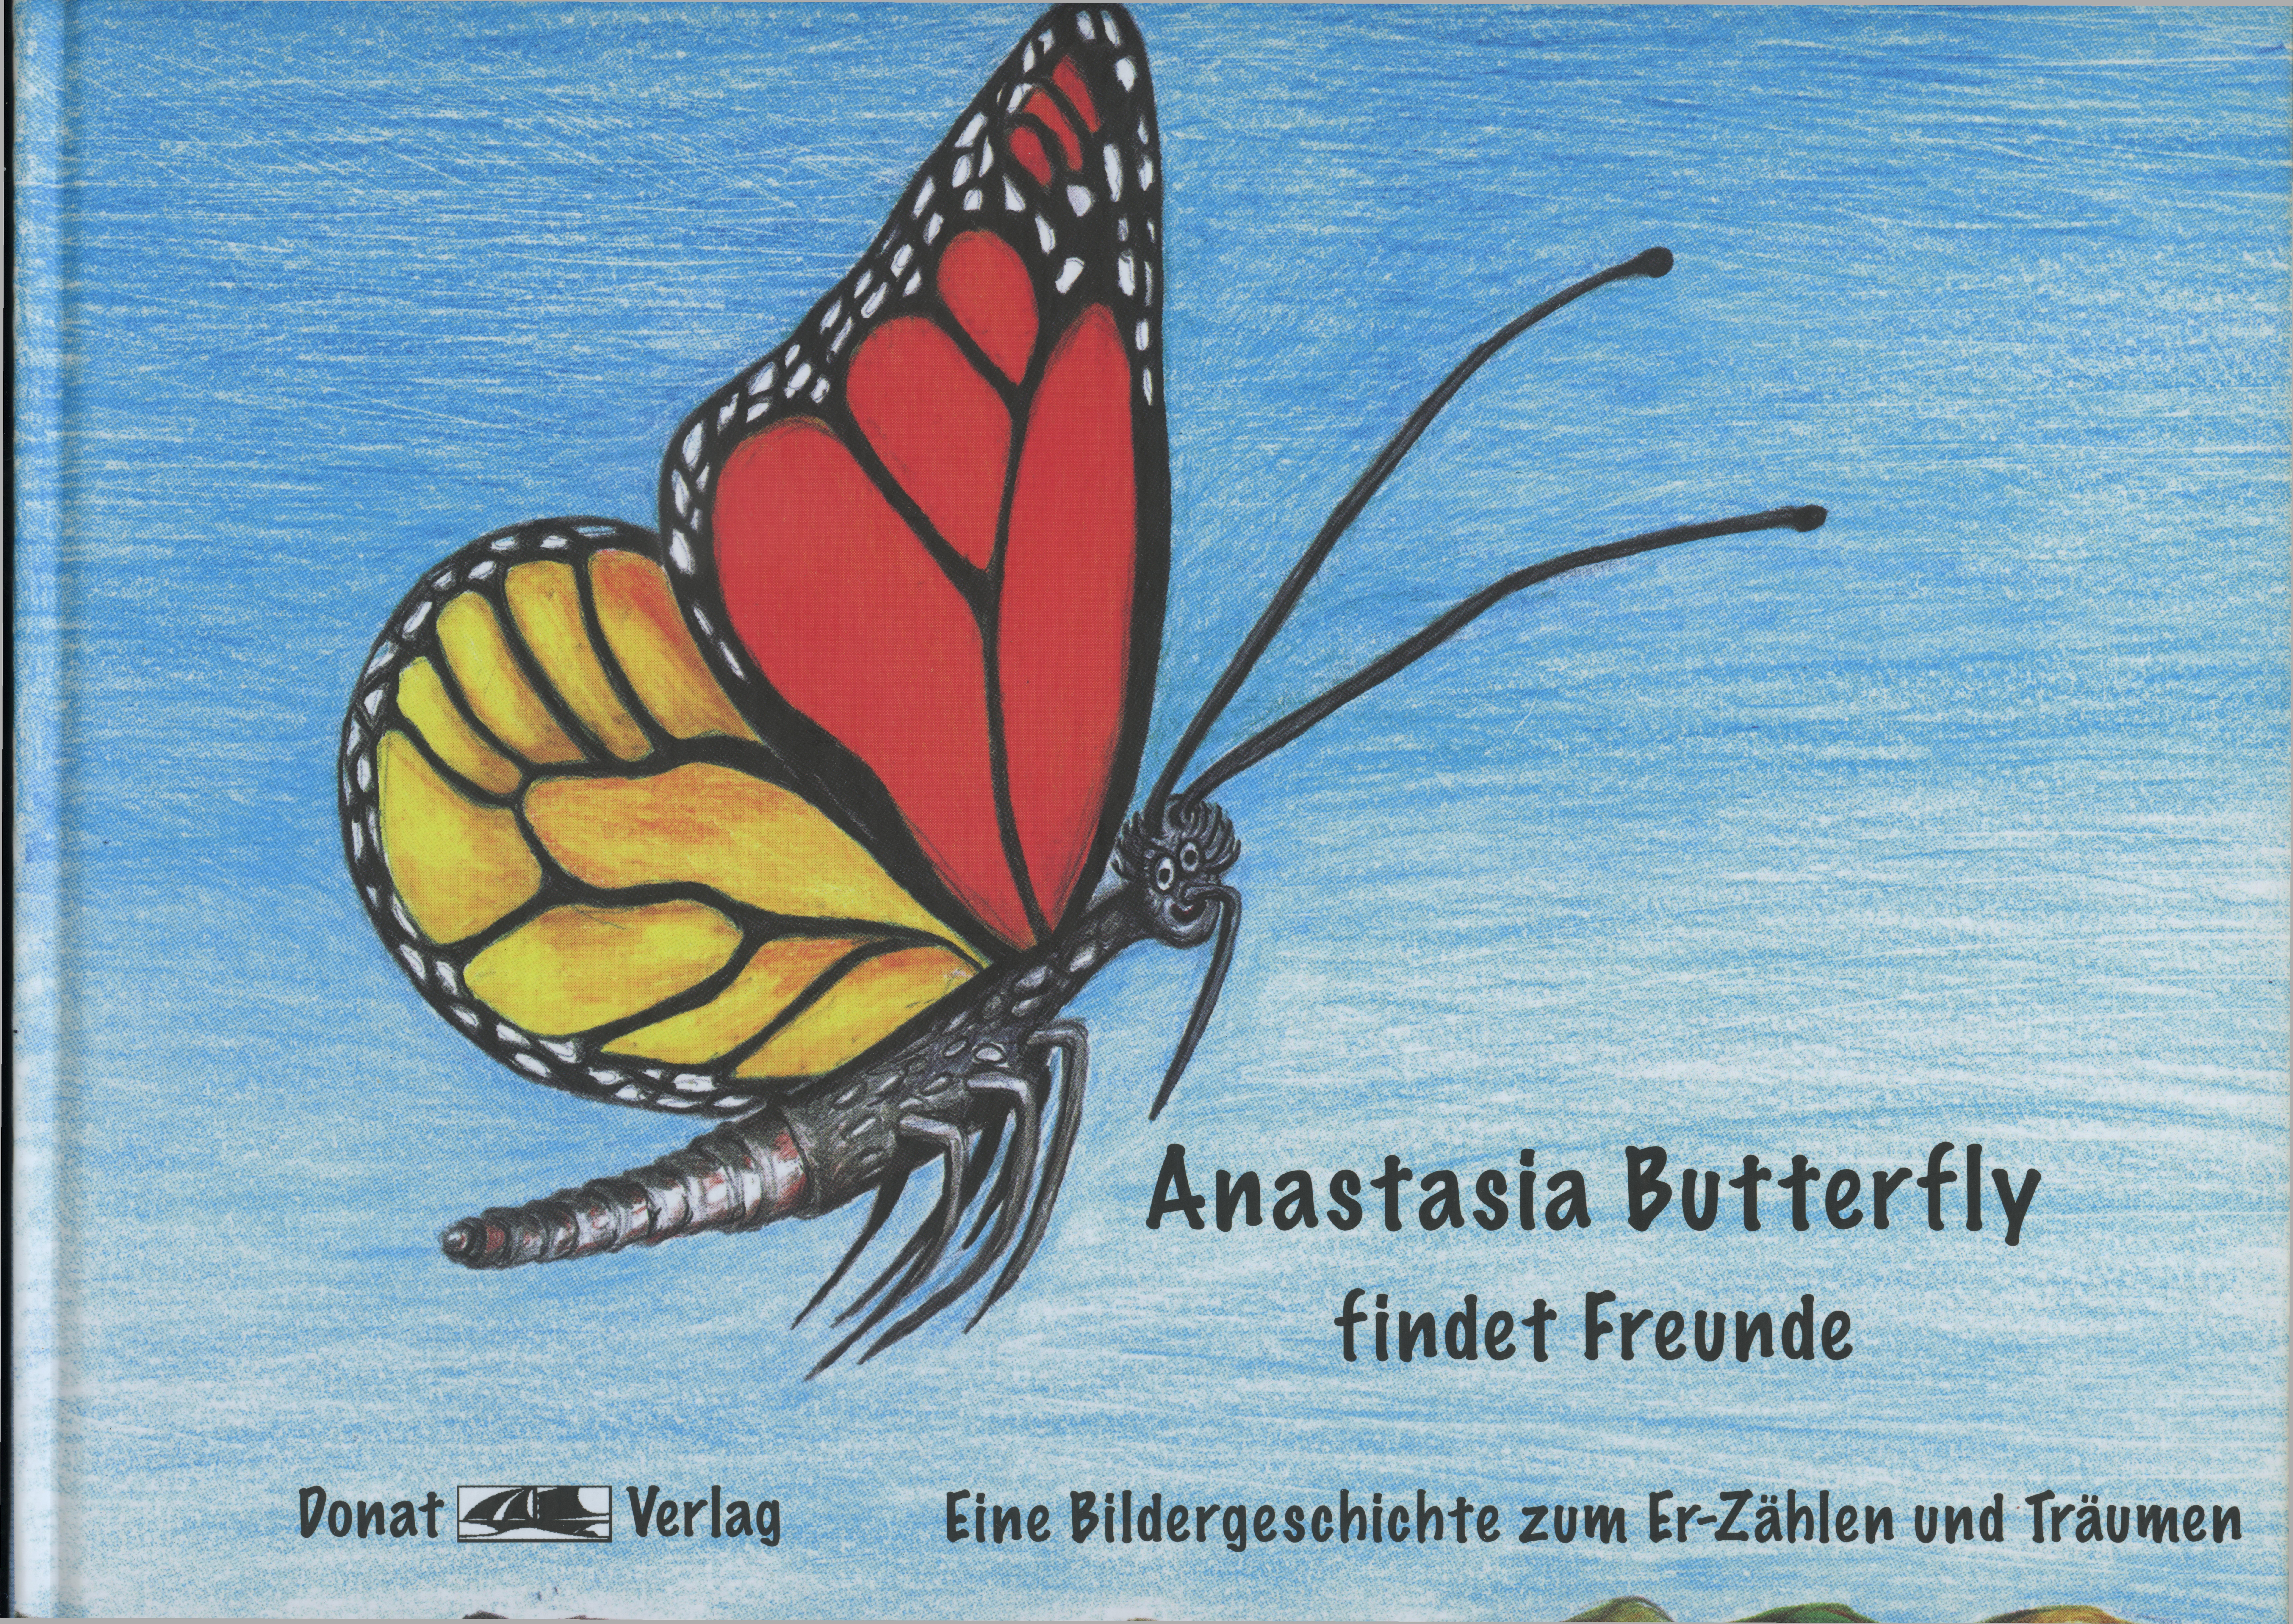 Anastasia Butterfly findet Freunde